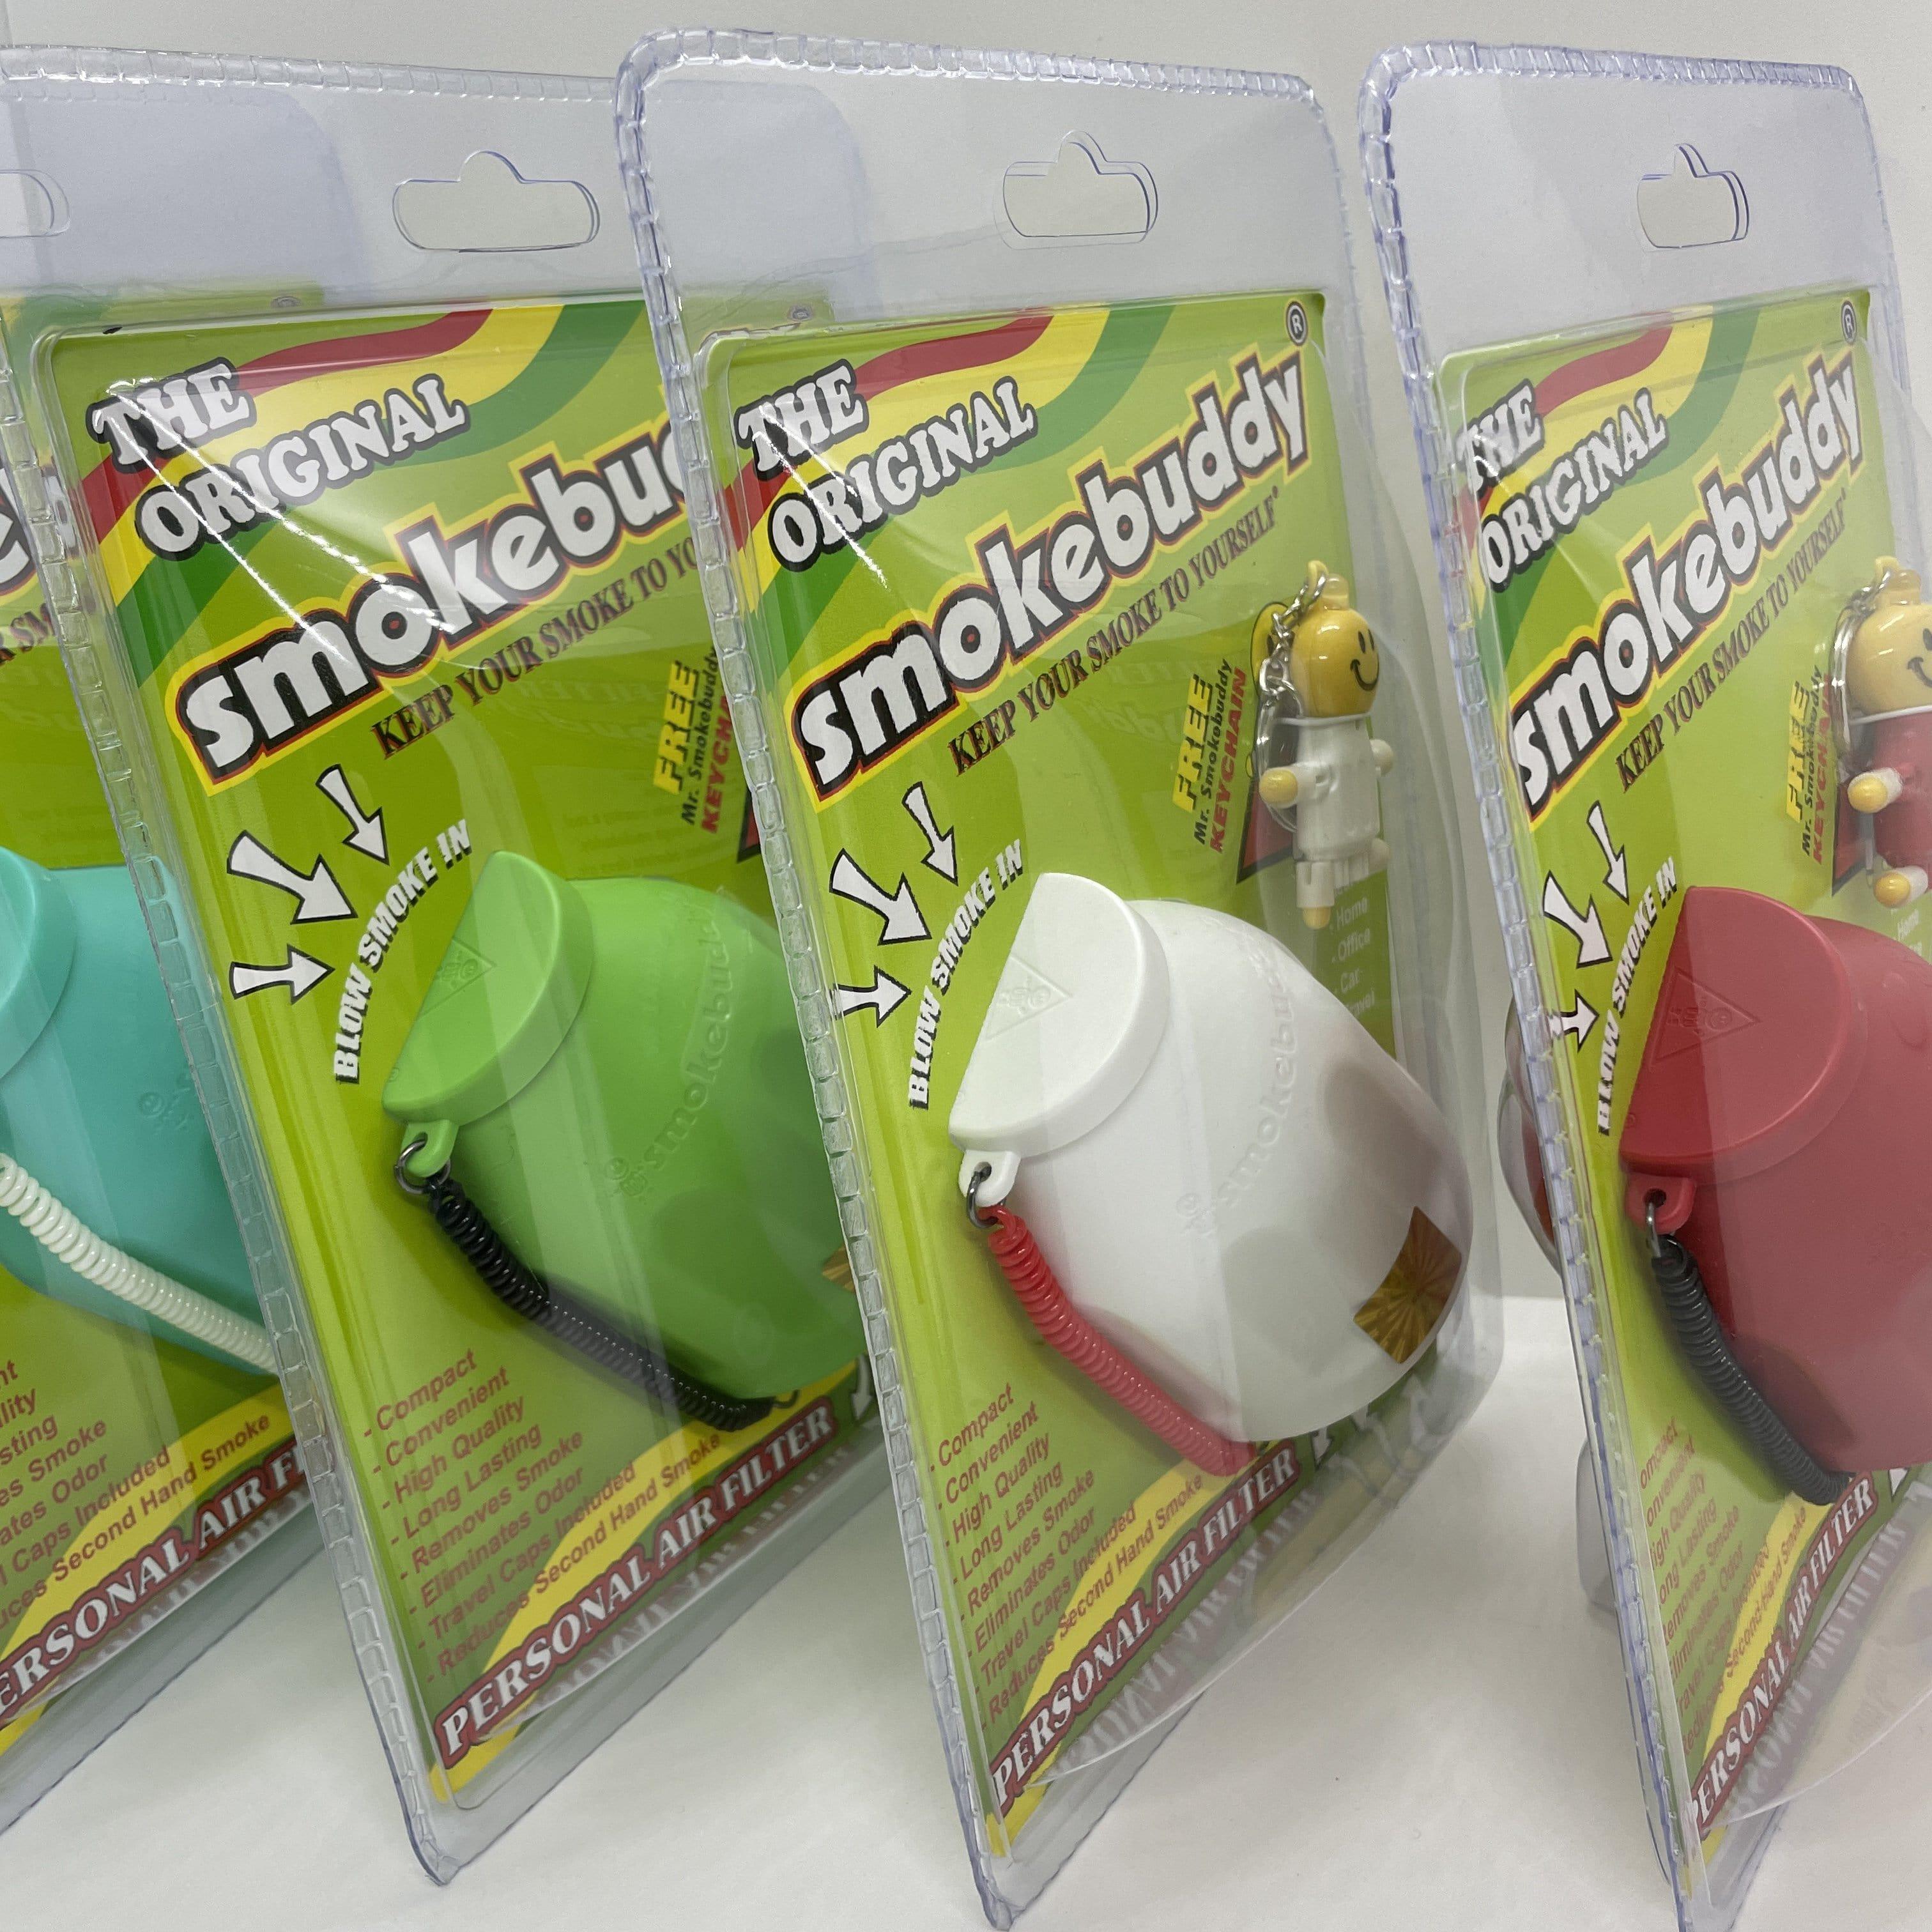 Smoke Buddy Original Personal Air Filter — Smokin Js